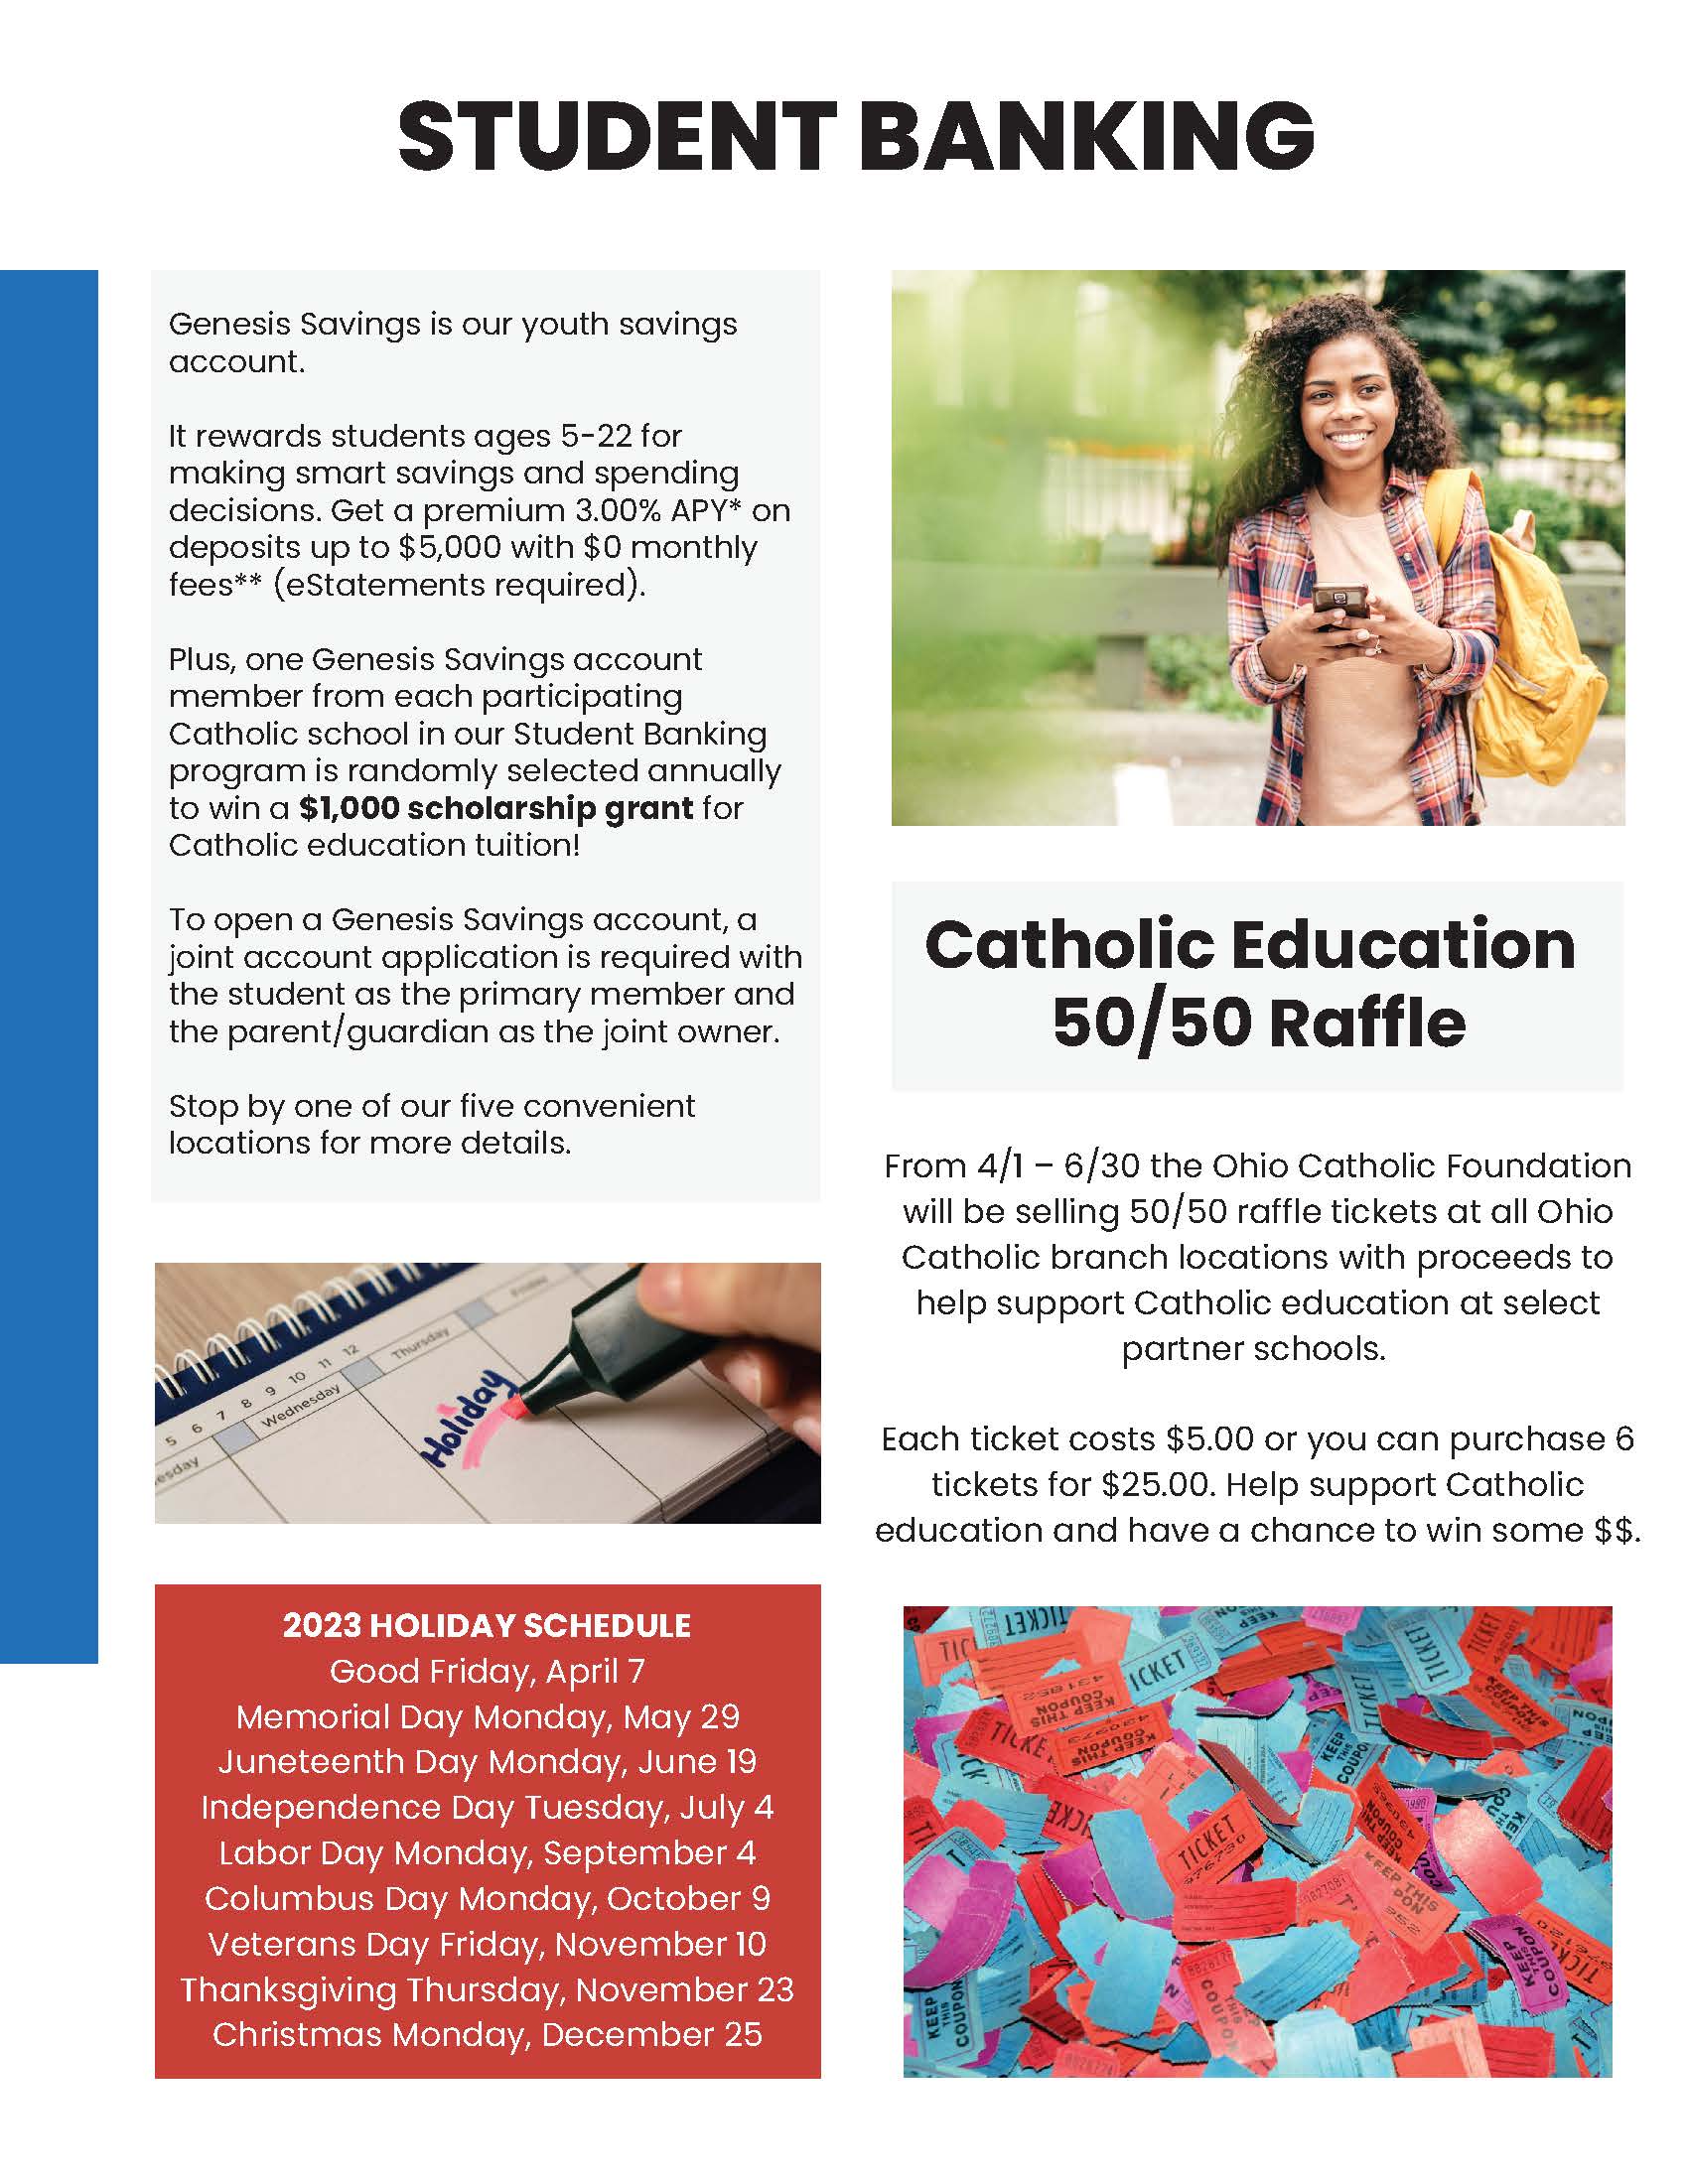 Newsletter created for Ohio Catholic FCU